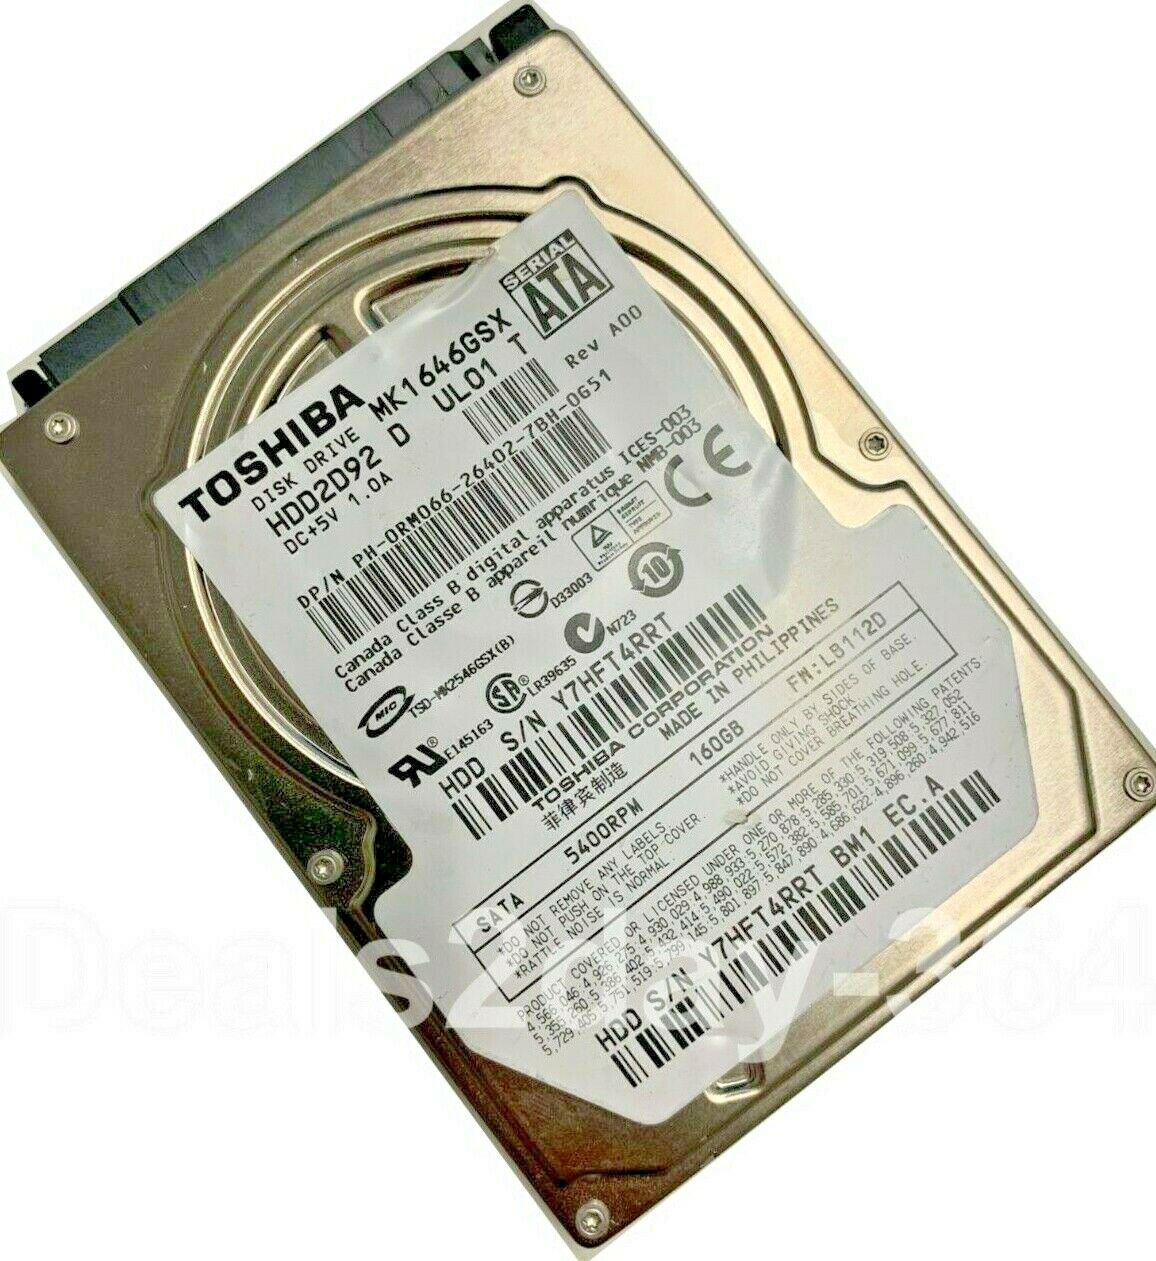 Toshiba HDD2D92 160 GB,5400 RPM (MK1646GSX) HDD for sale 